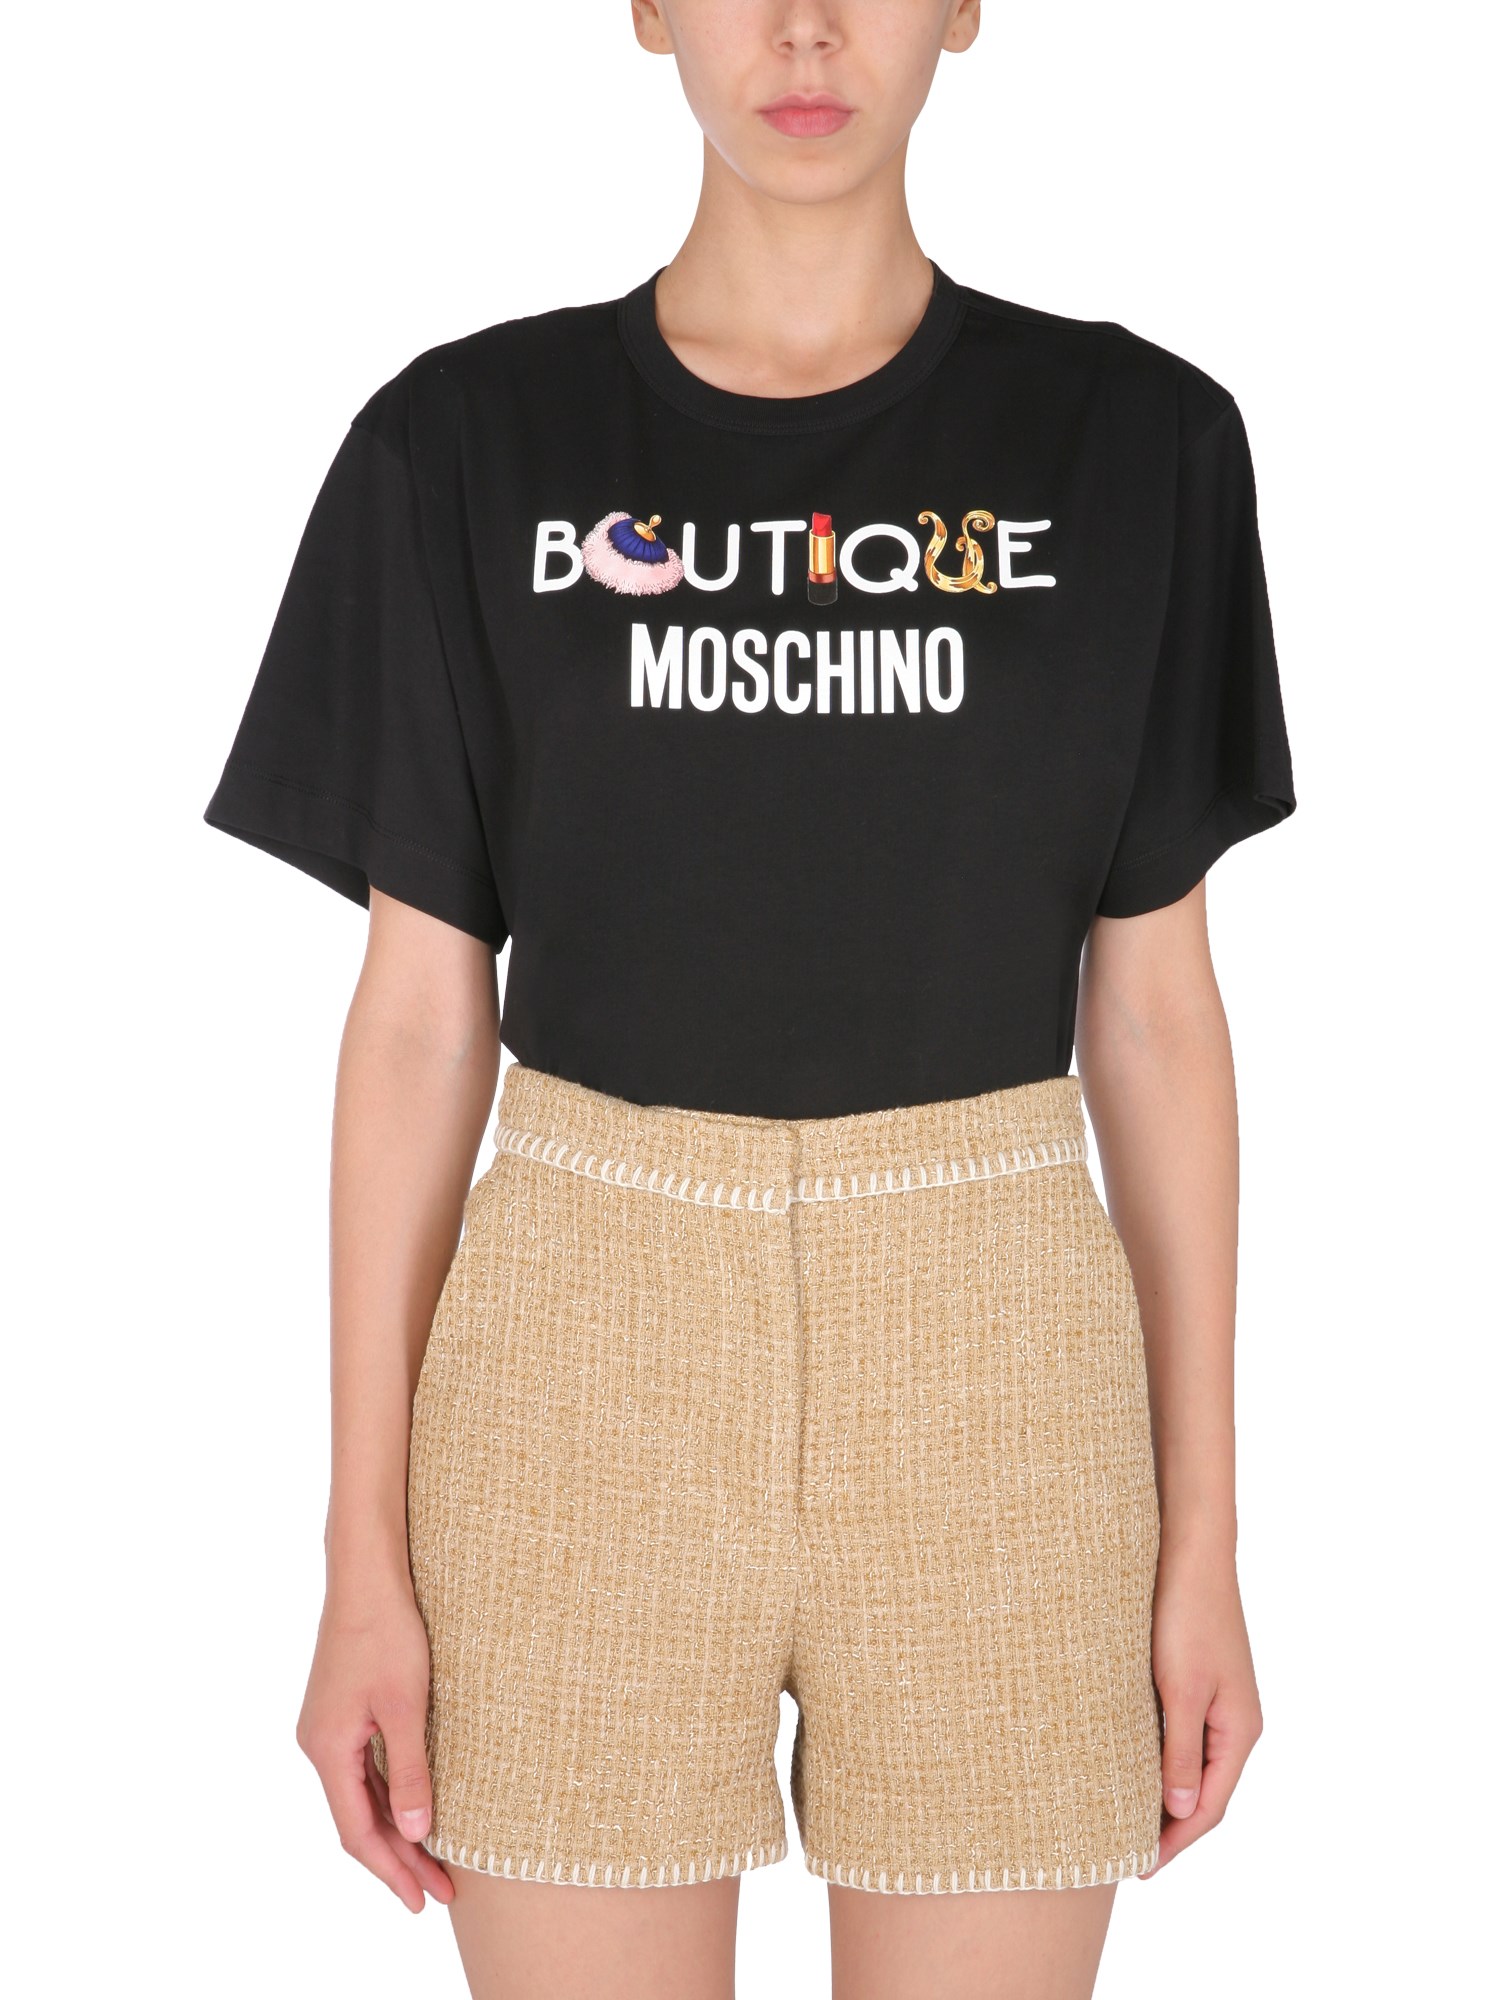 boutique moschino riding kit t-shirt